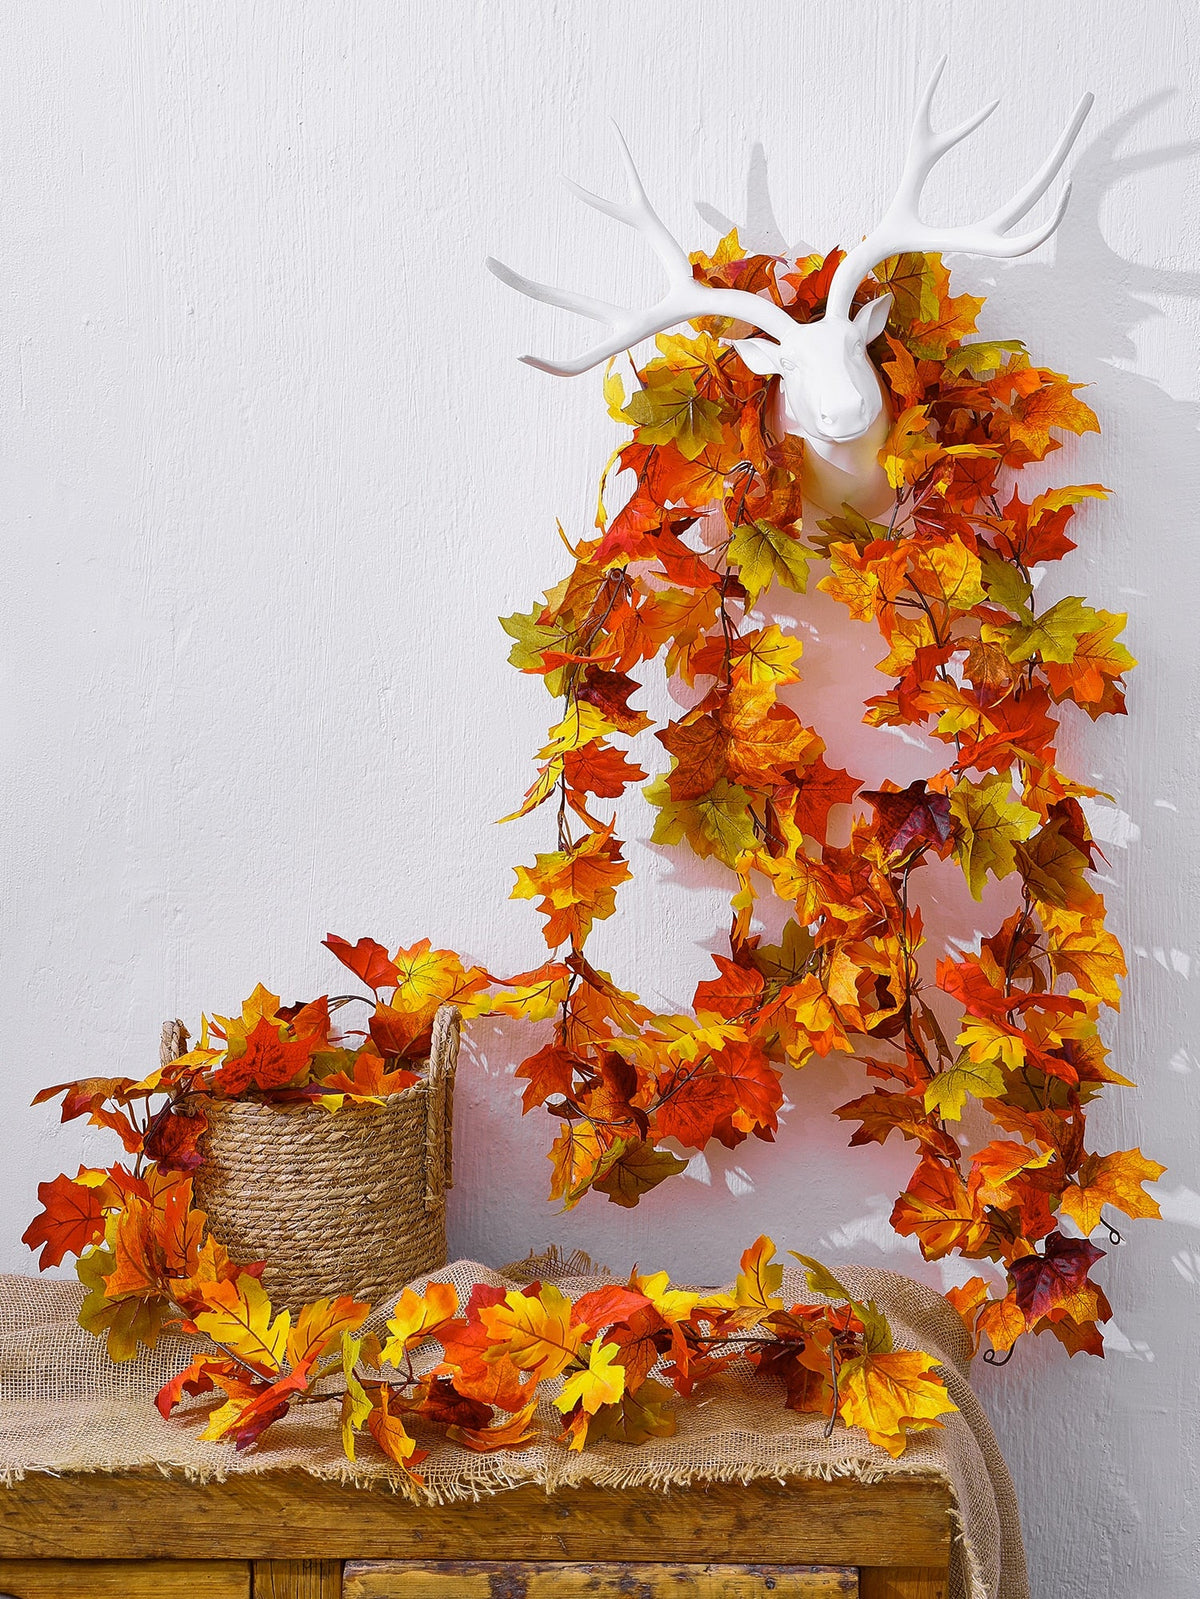 175cm Autumn Decoration Artificial Maple Leaves Garland Vine Thanksgiving Halloween Garden For Wedding Party Home Fall Decor